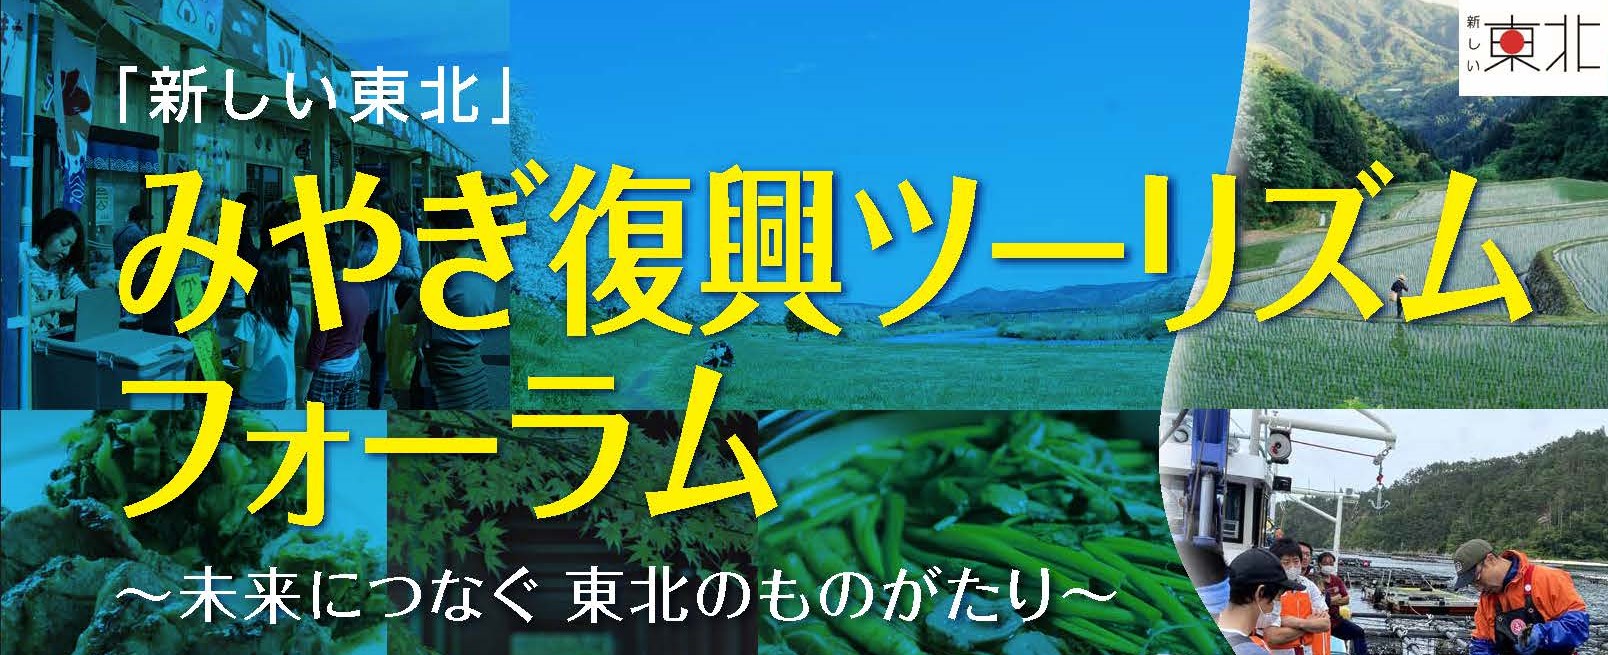 banner_fukkotourismforum20231226.jpg